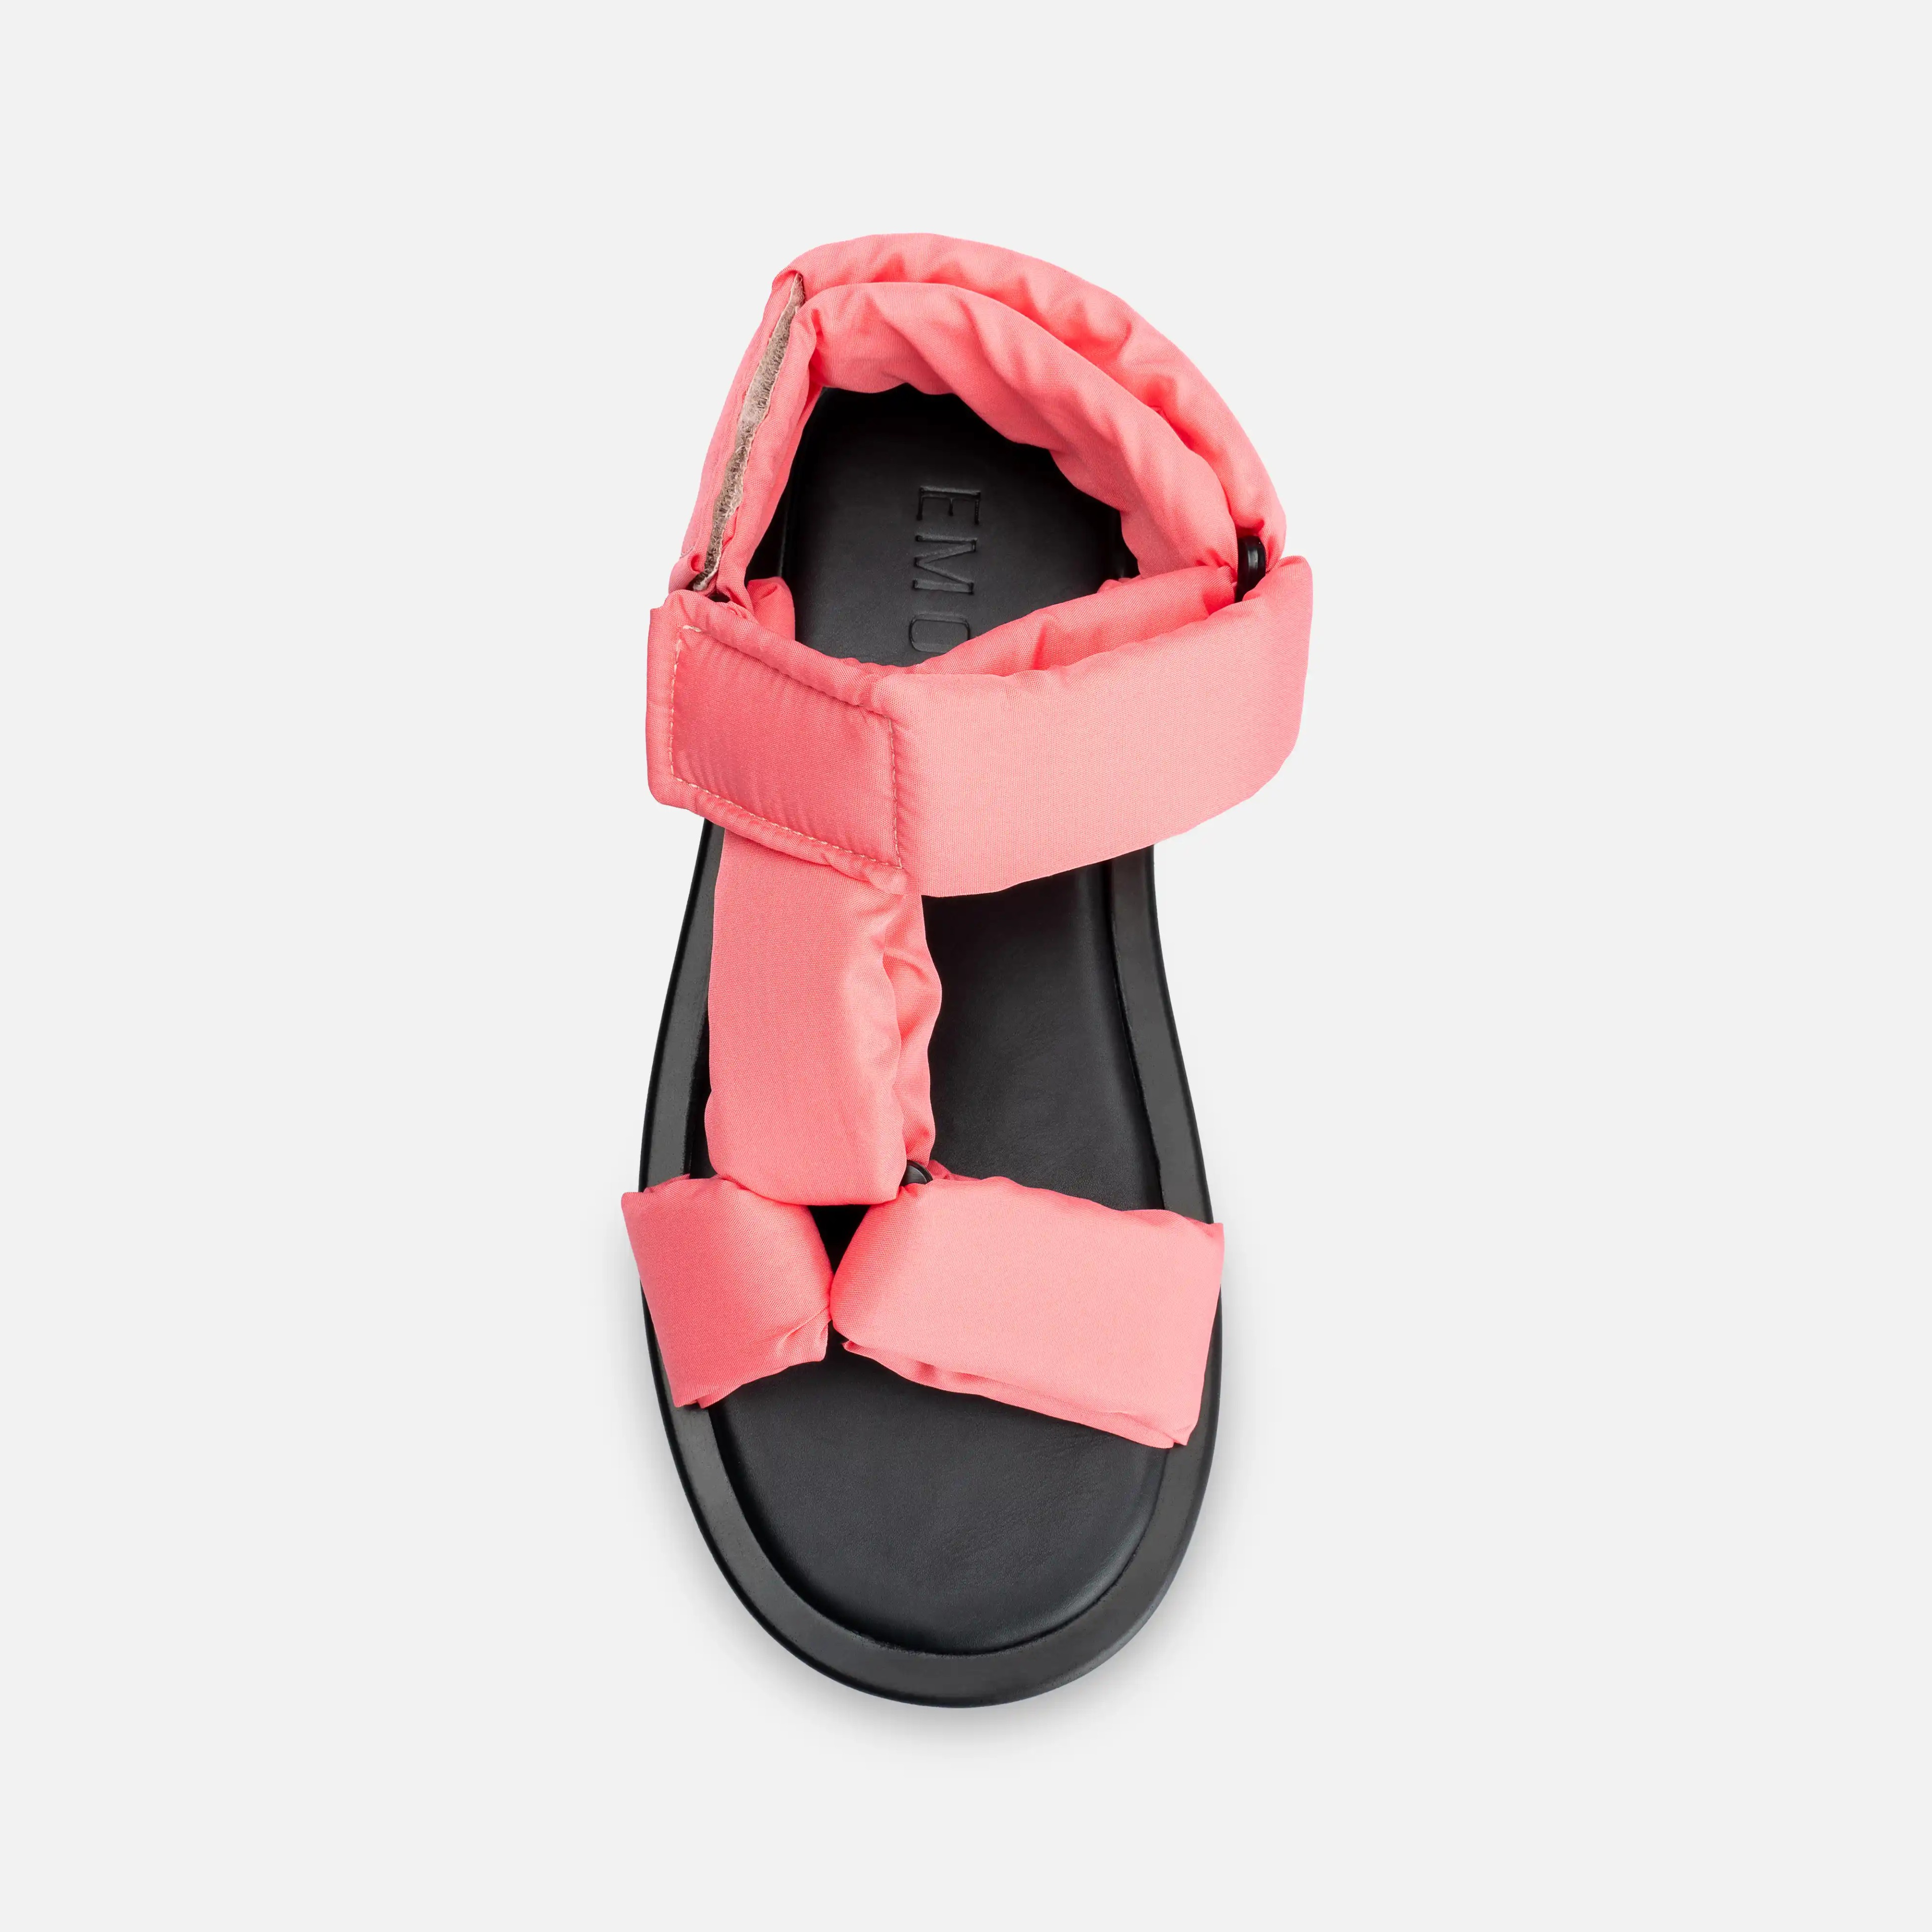 Parachute Fabric Thick Comfortable Sole Sandals - Gül Kurusu